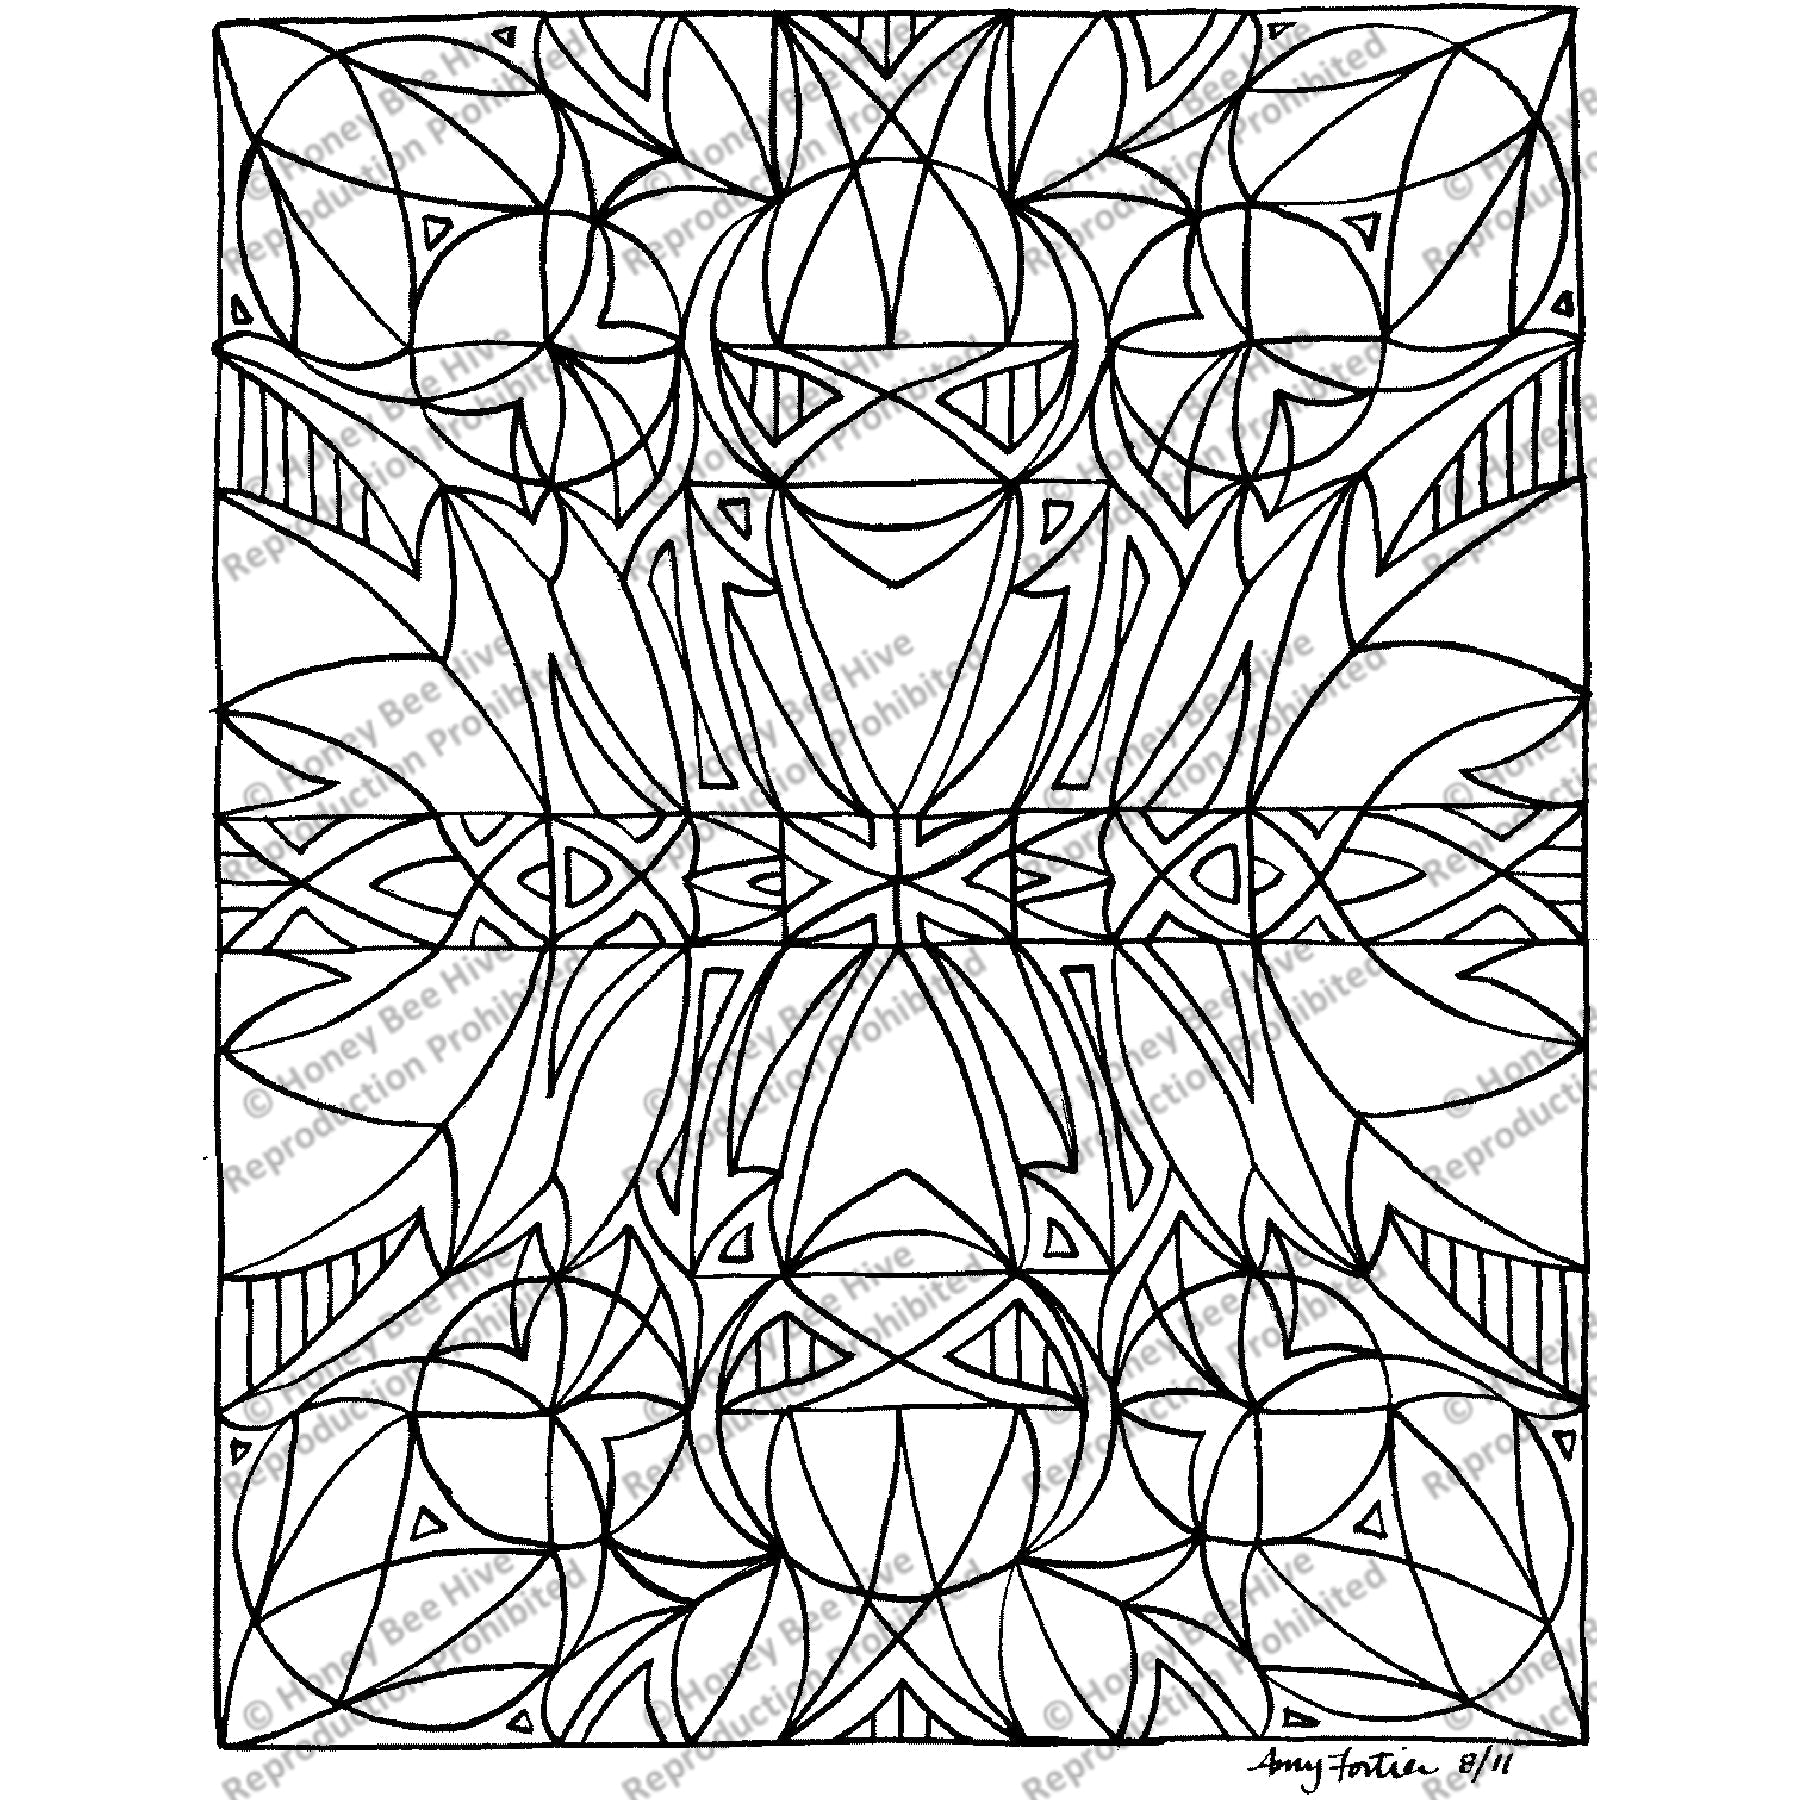 Mariposa, rug hooking pattern